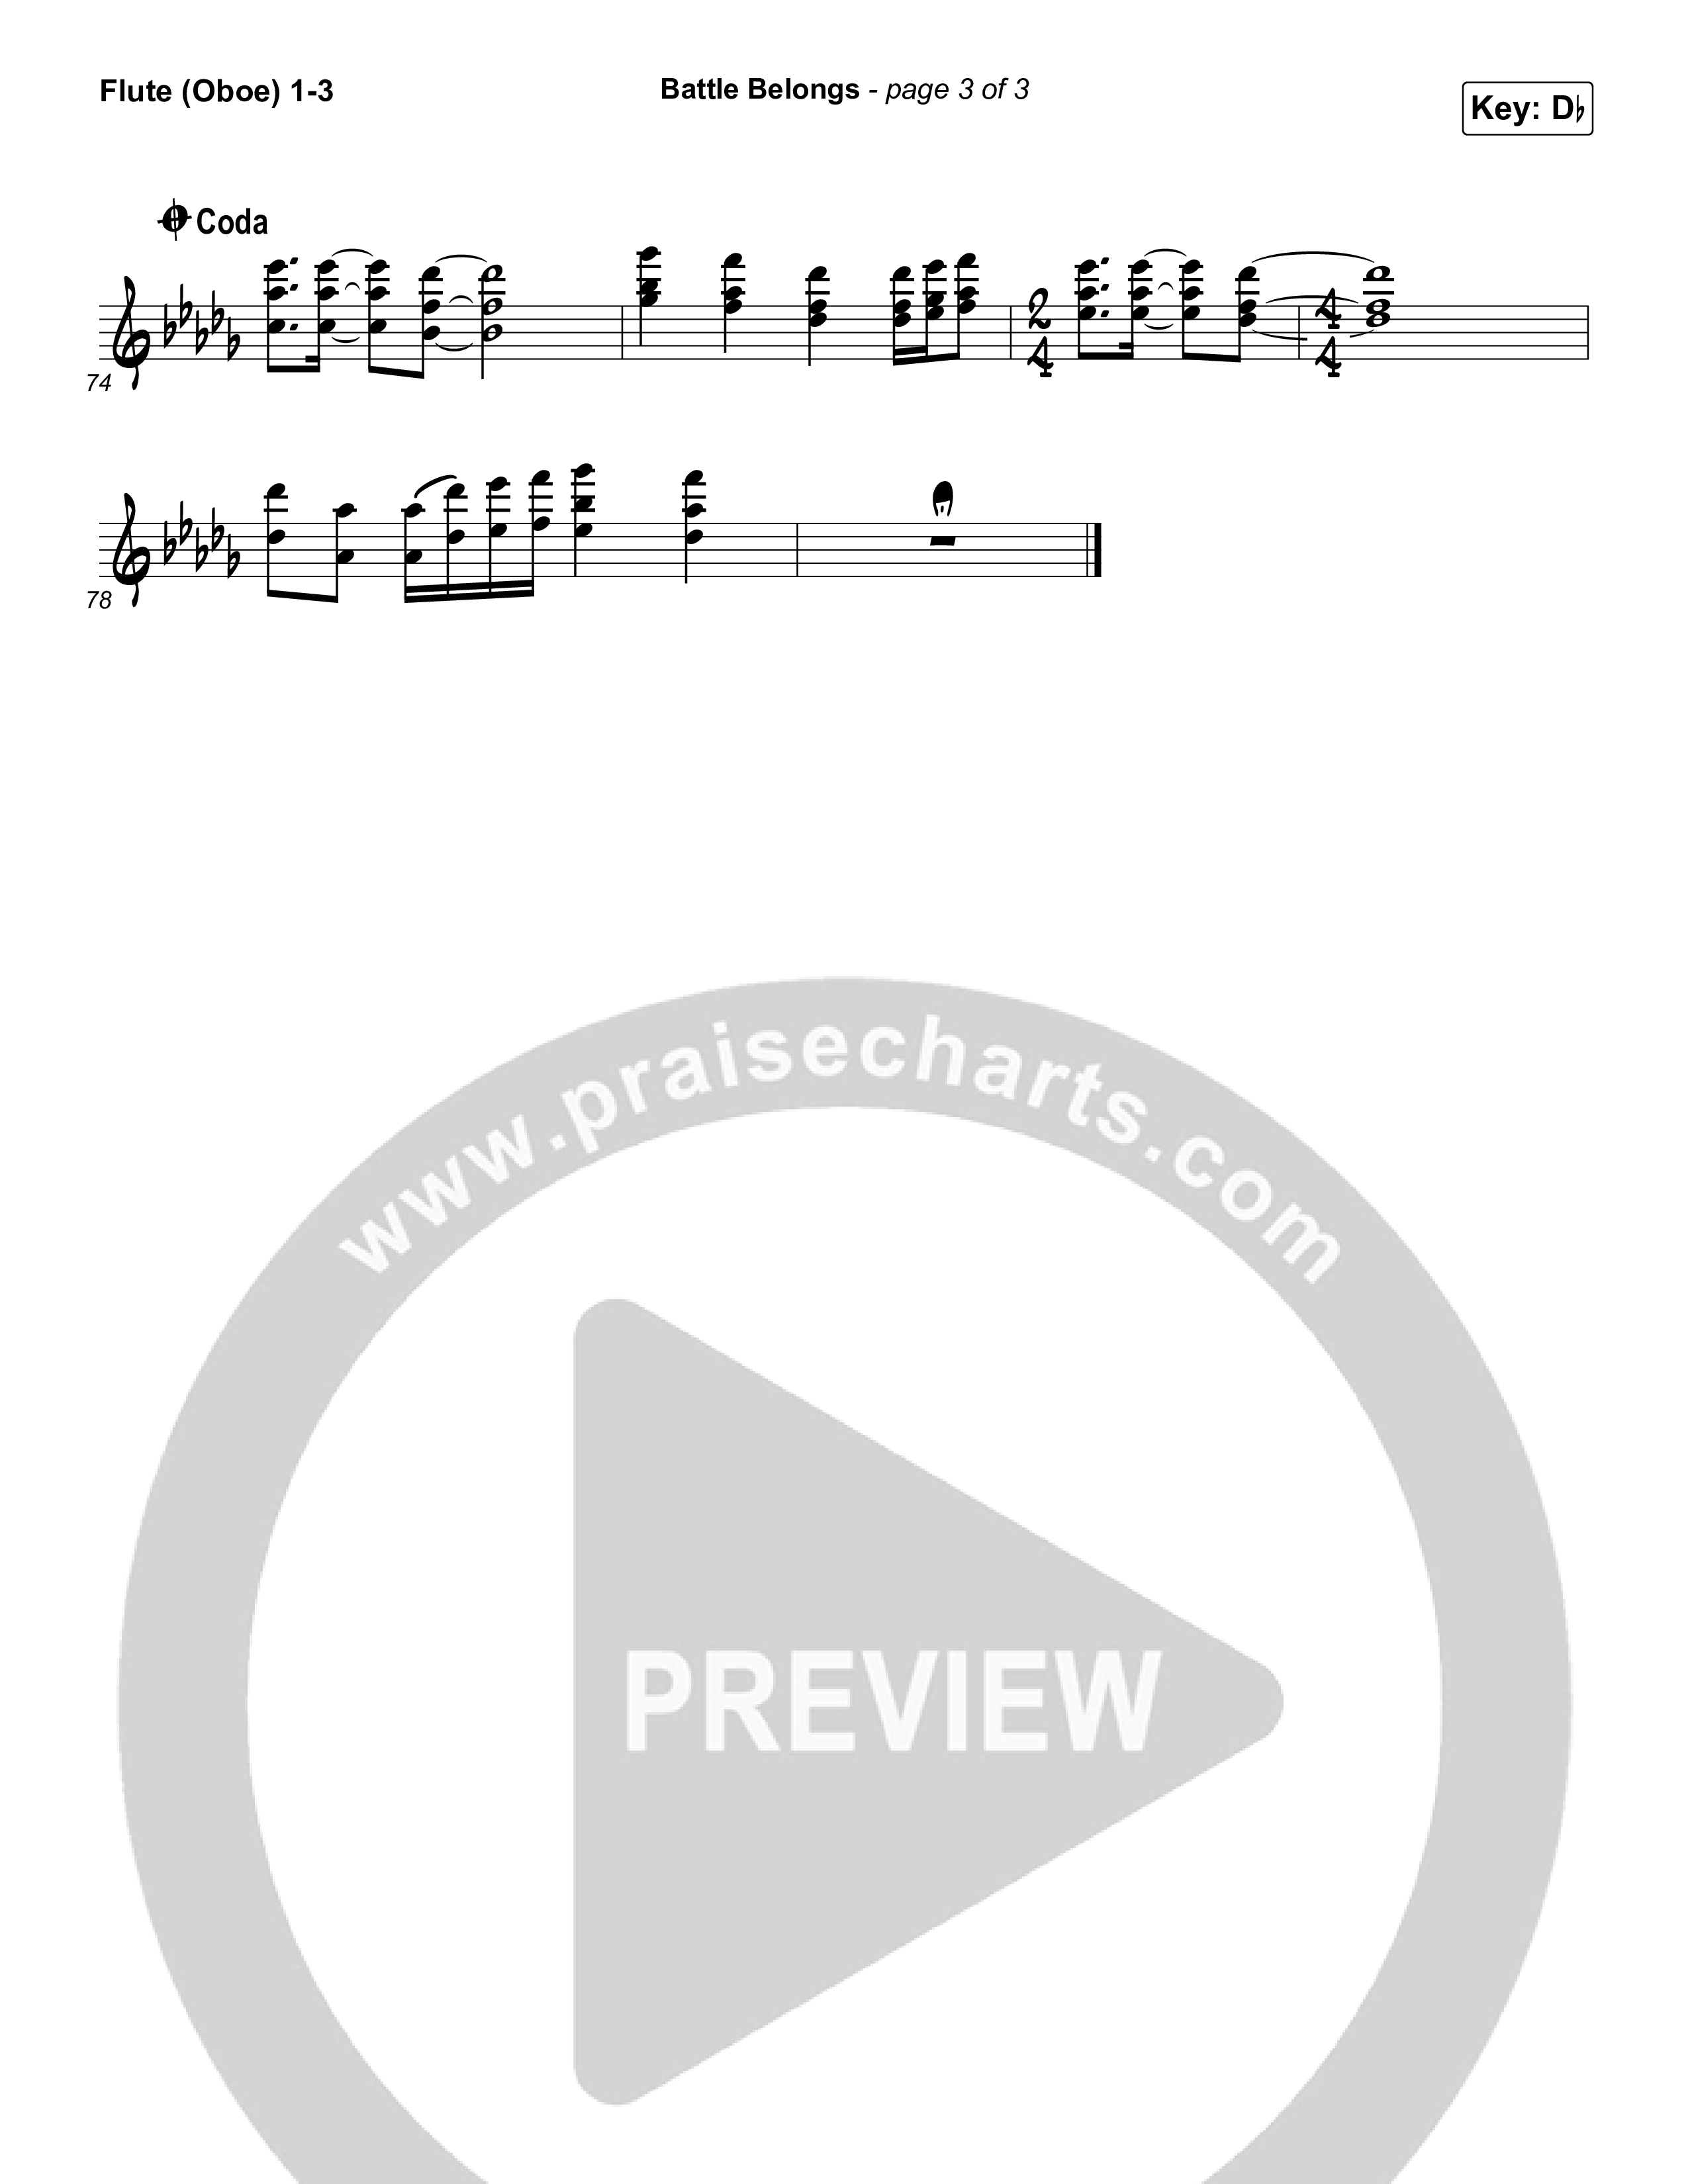 Battle Belongs (Choral Anthem SATB) Flute/Oboe 1/2/3 (Phil Wickham / Arr. Luke Gambill)